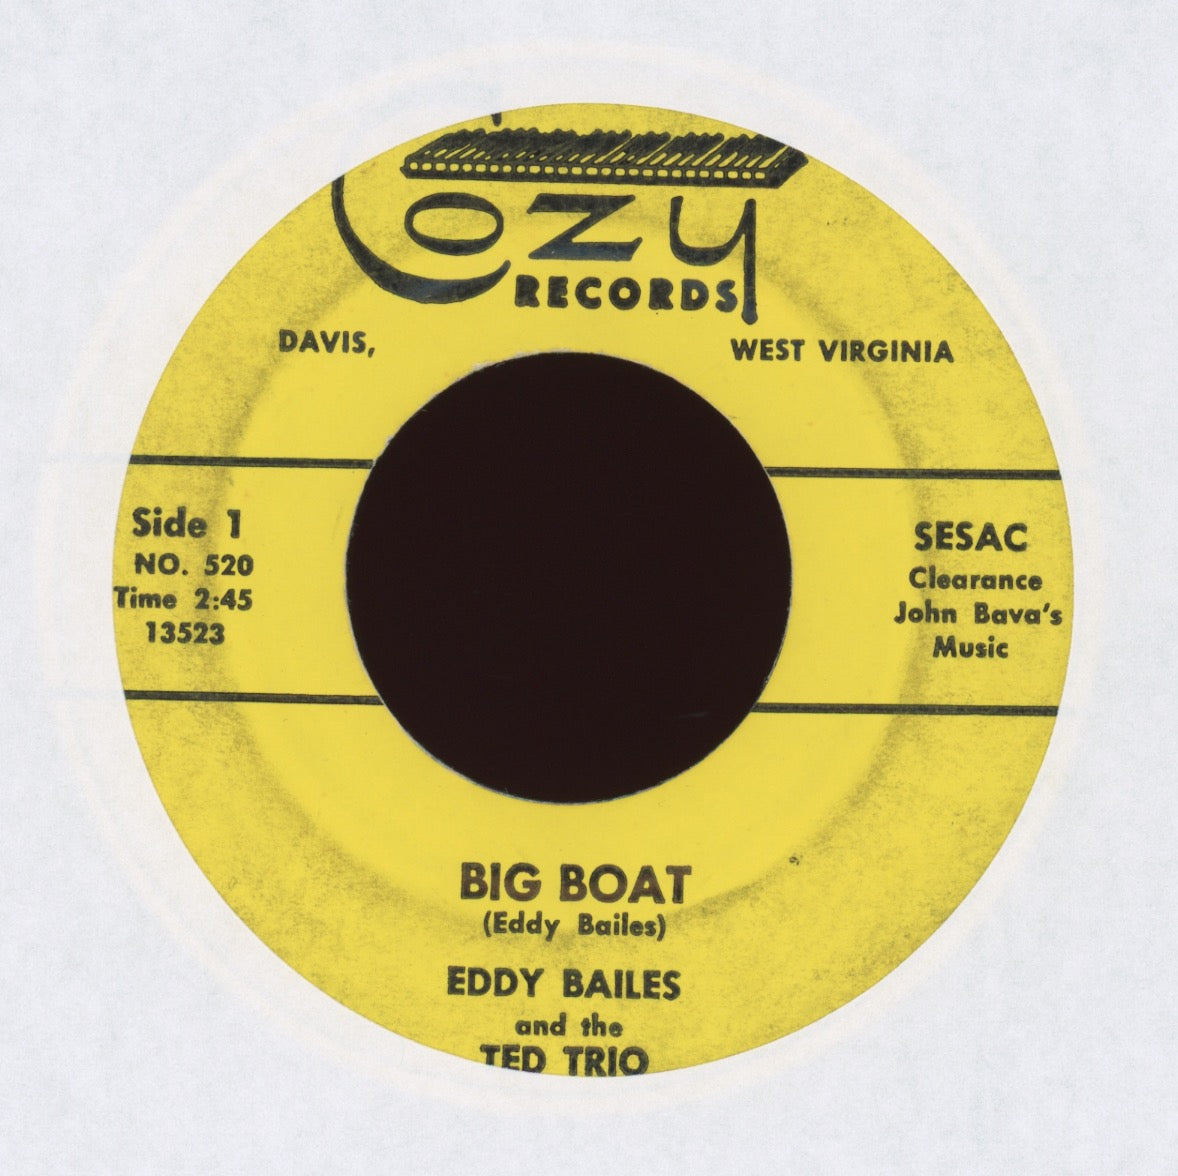 Eddy Bailes - Big Boat on Cozy